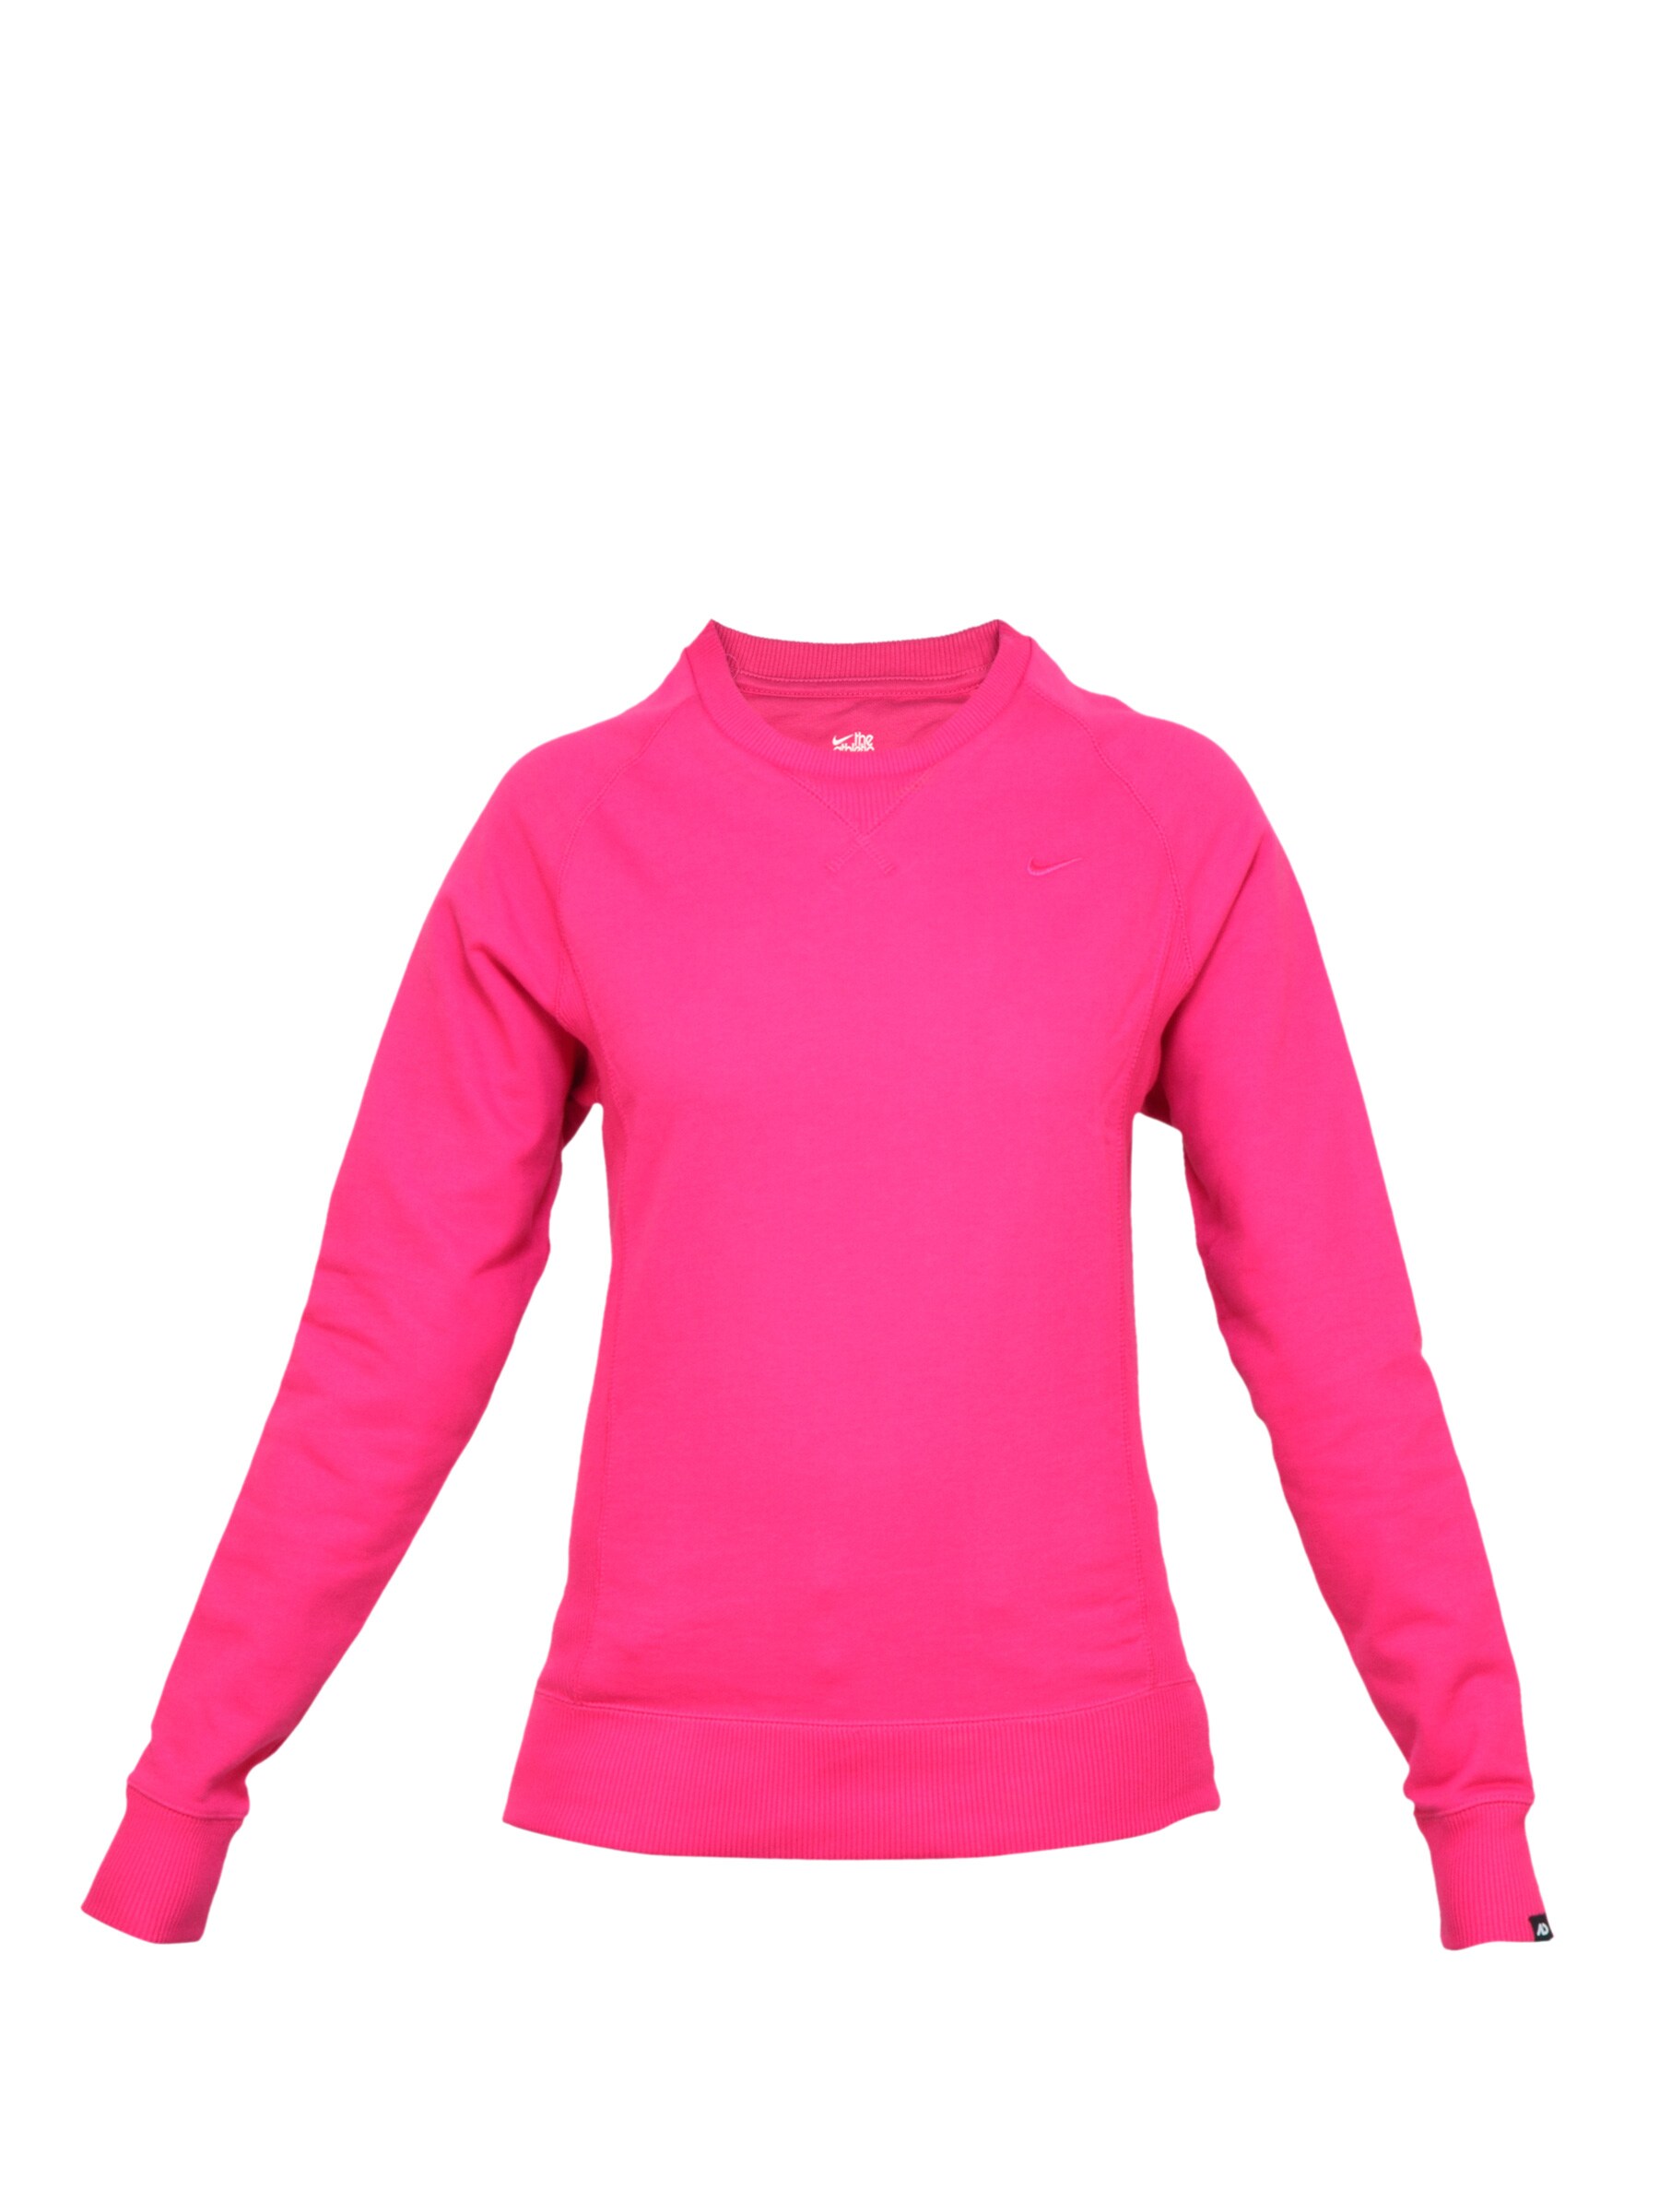 Nike Women Pink Sweatshirts